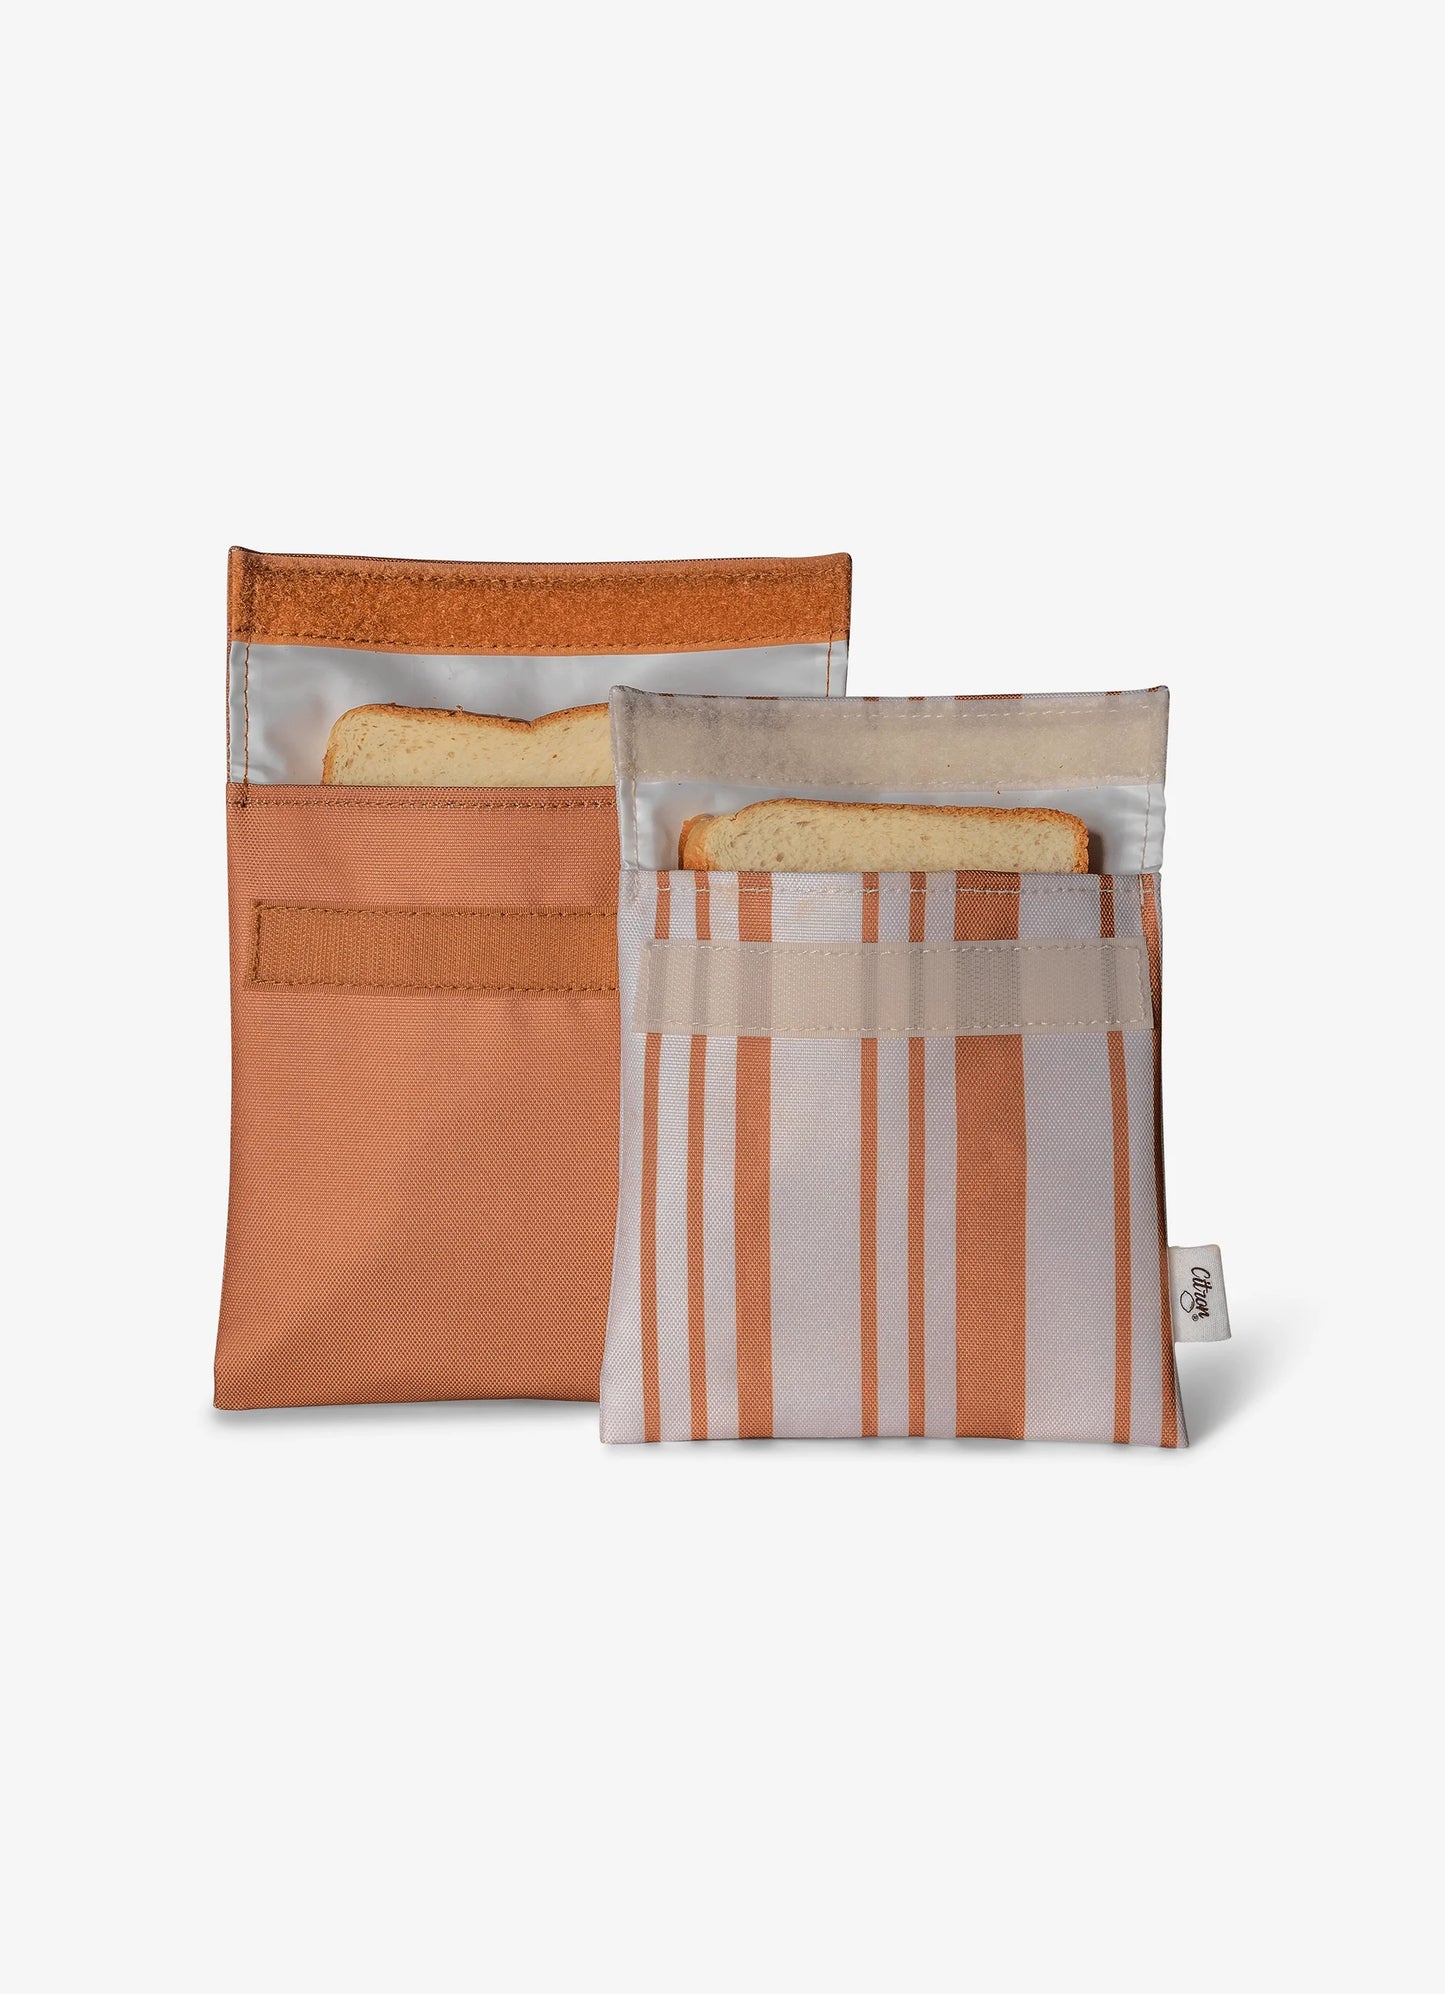 Two Reusable Sandwich Bags - Caramel